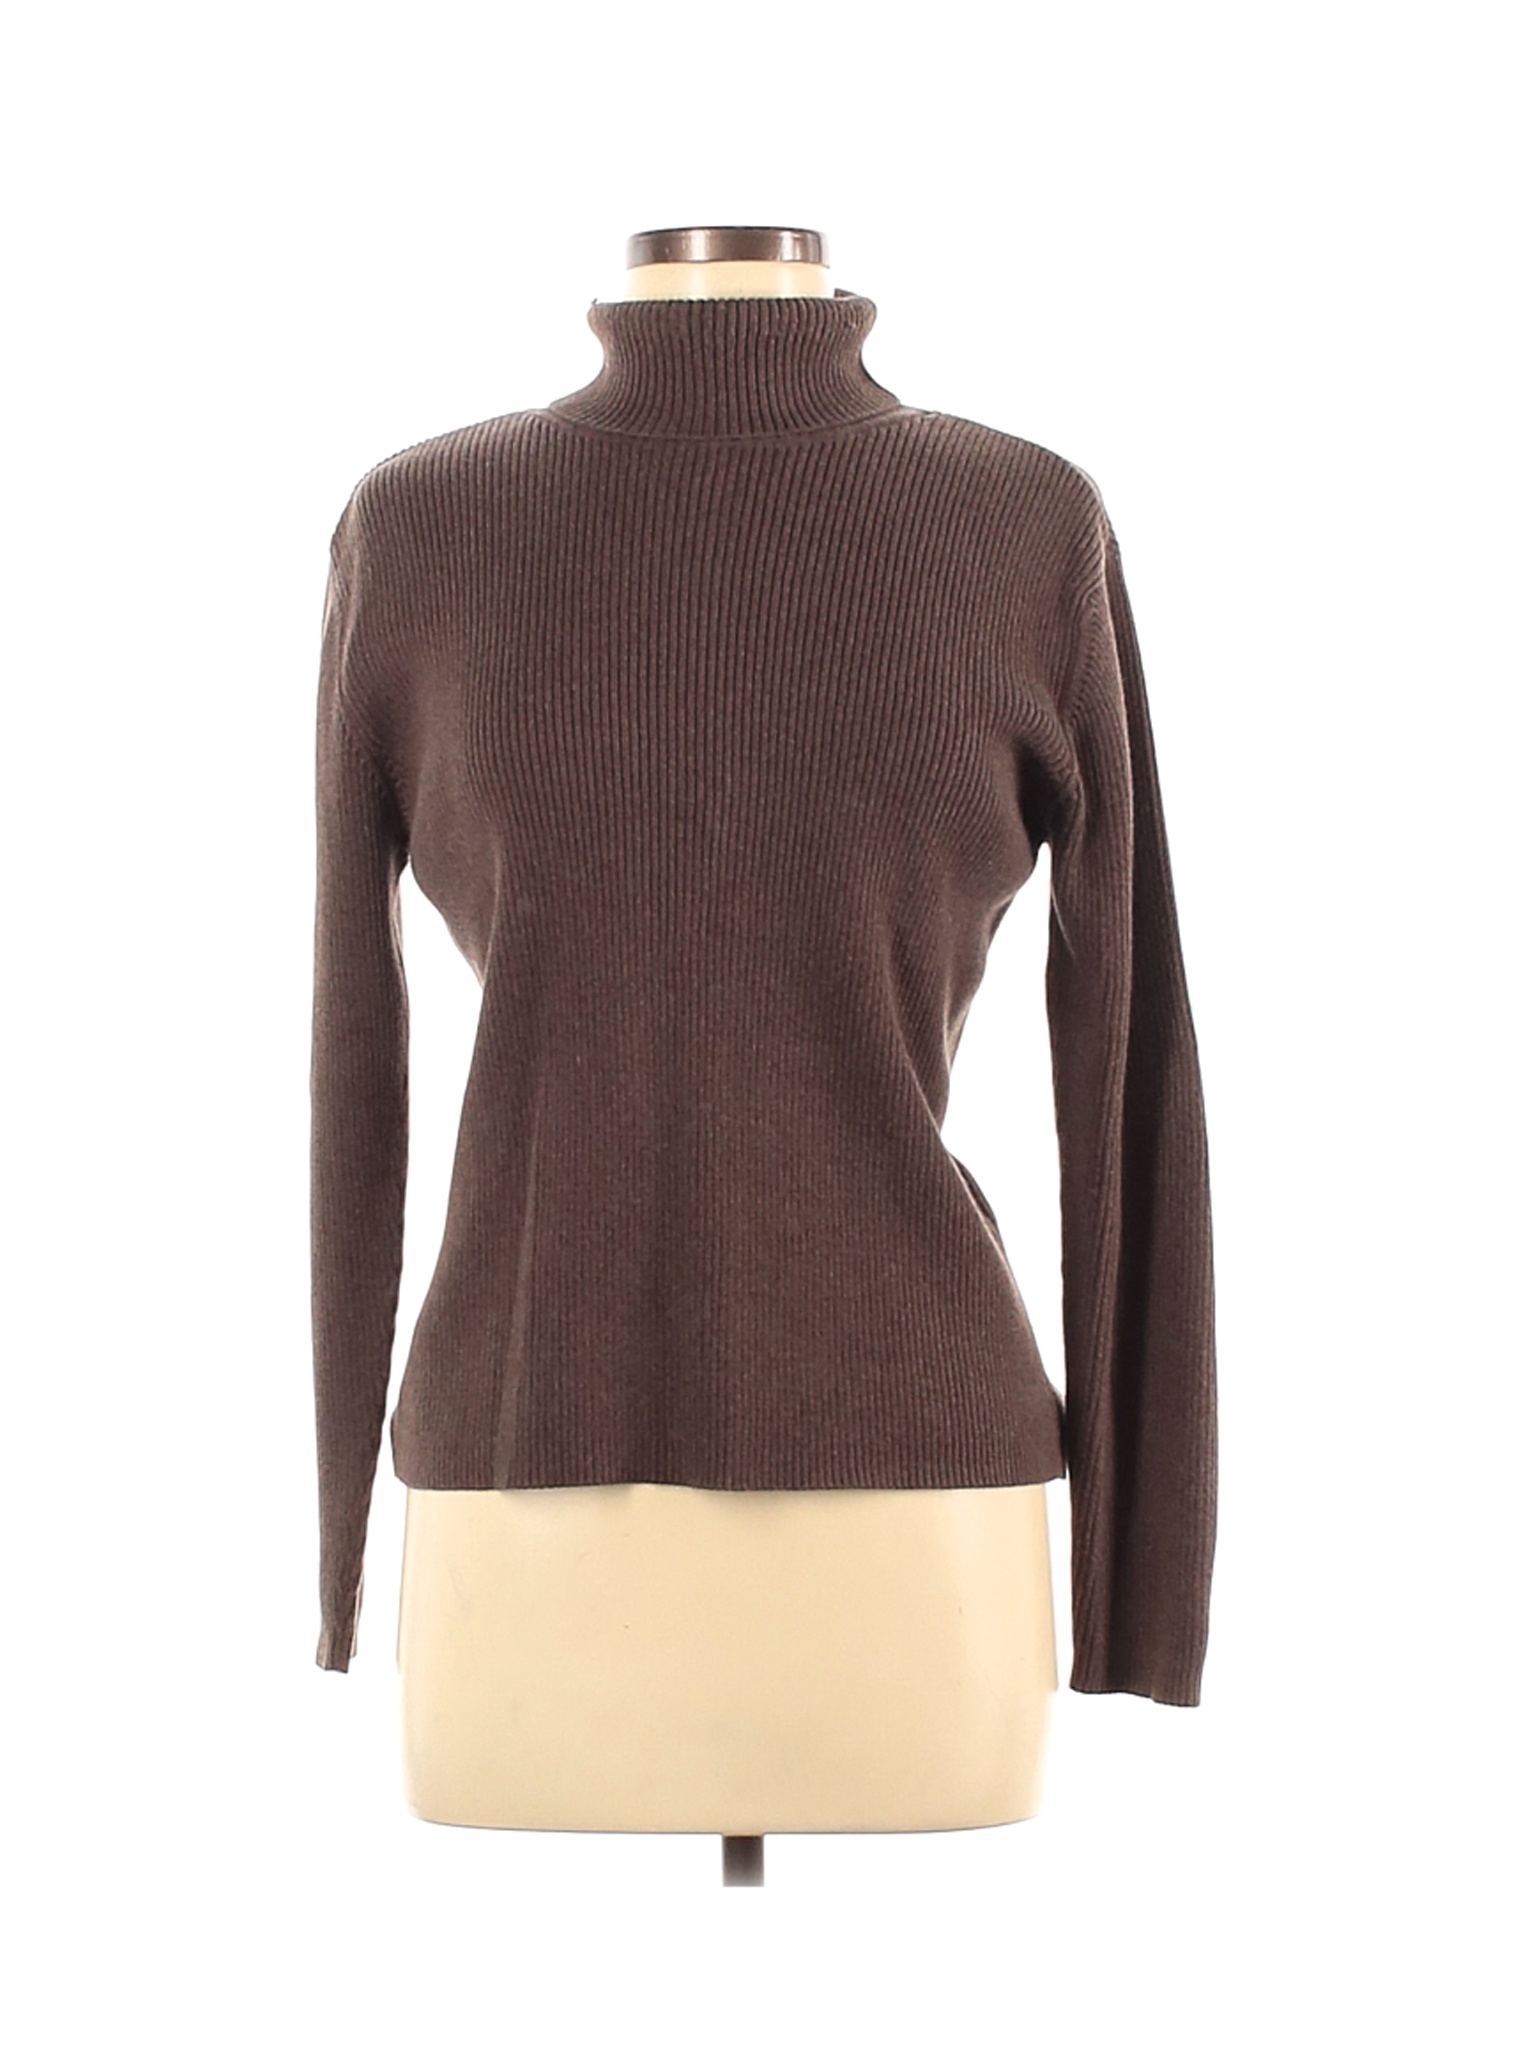 Talbots Women Brown Turtleneck Sweater L | eBay